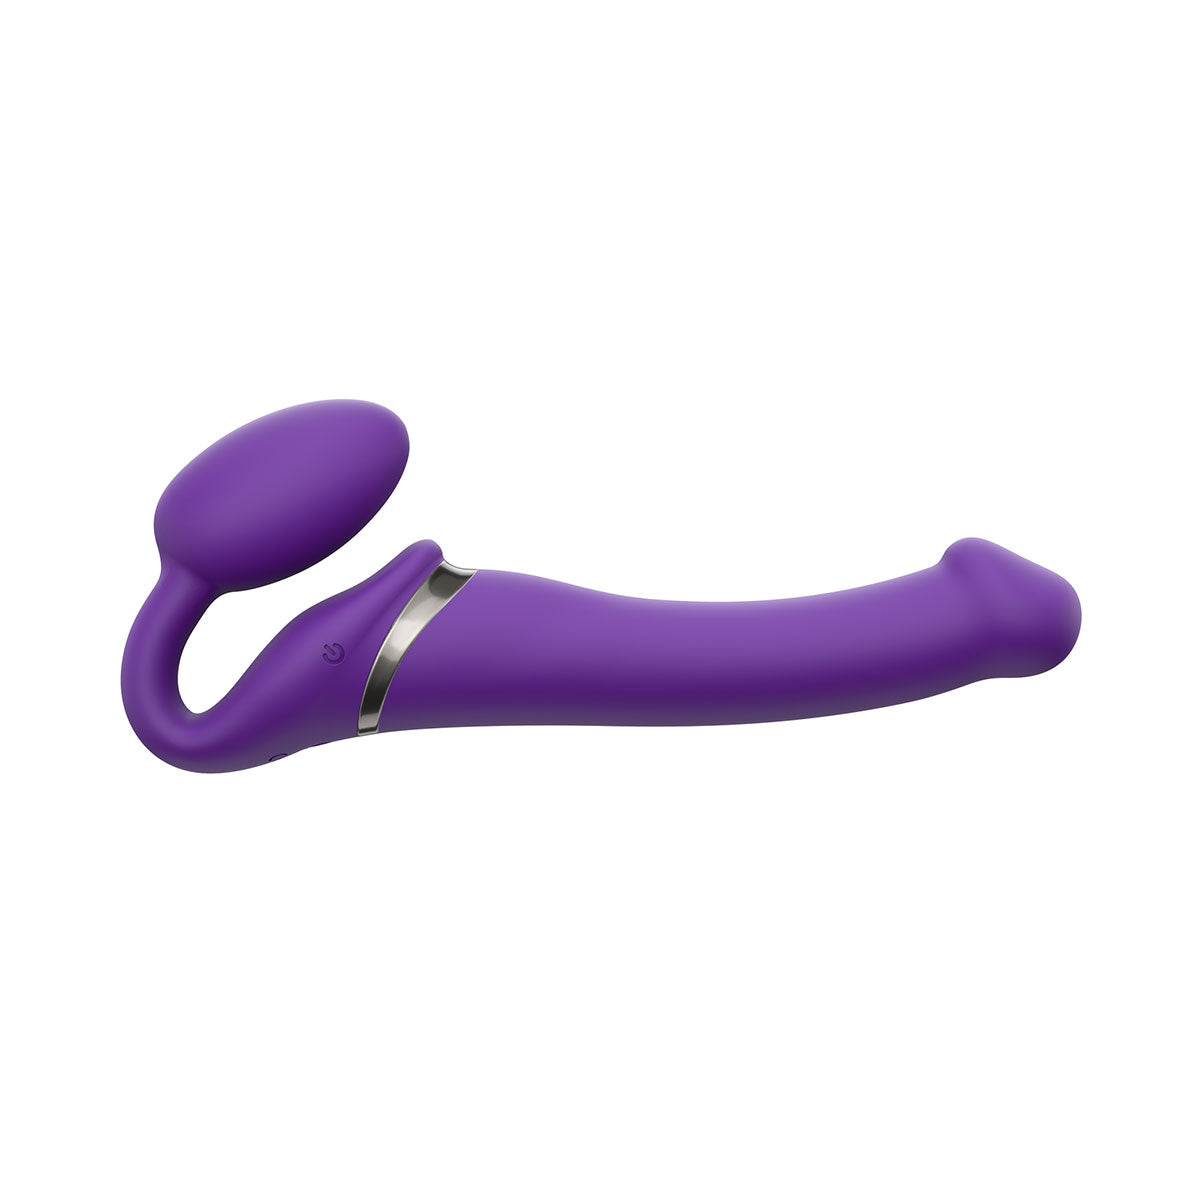 Strap-On-Me Vibrator Medium - Purple